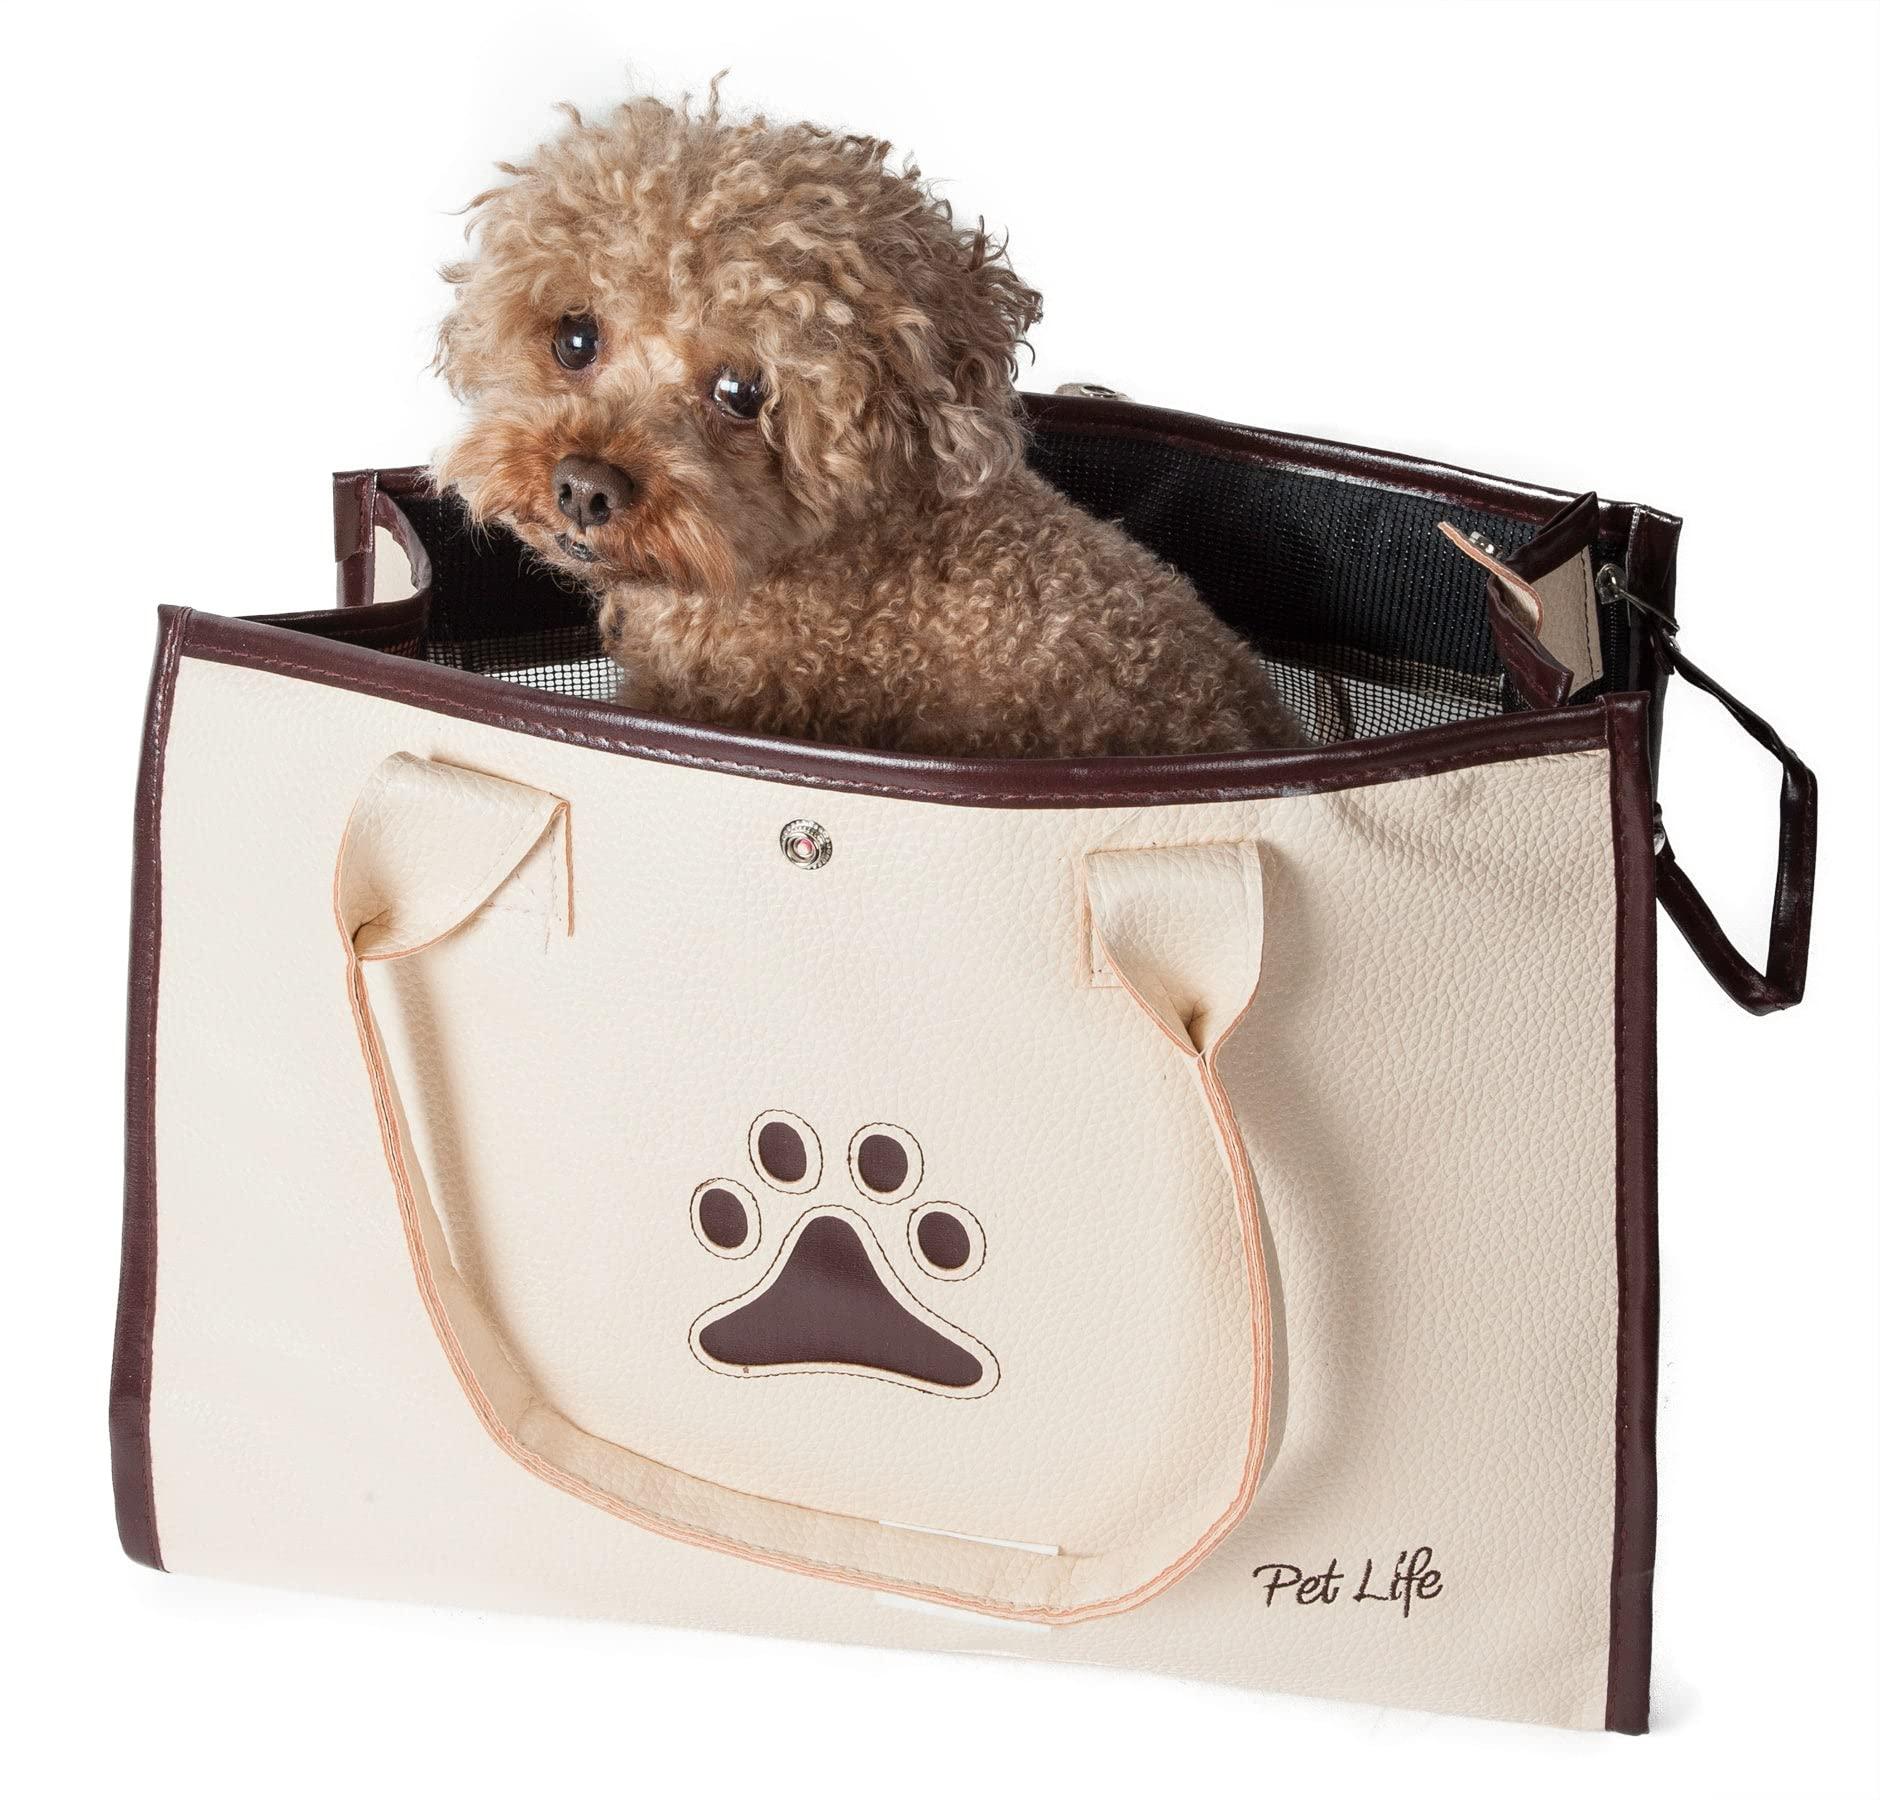 PET LIFE Posh Paw\\\' Designer Fashion Travel Folding Pet Dog Carrier, One Size, White/Brown Paw Print